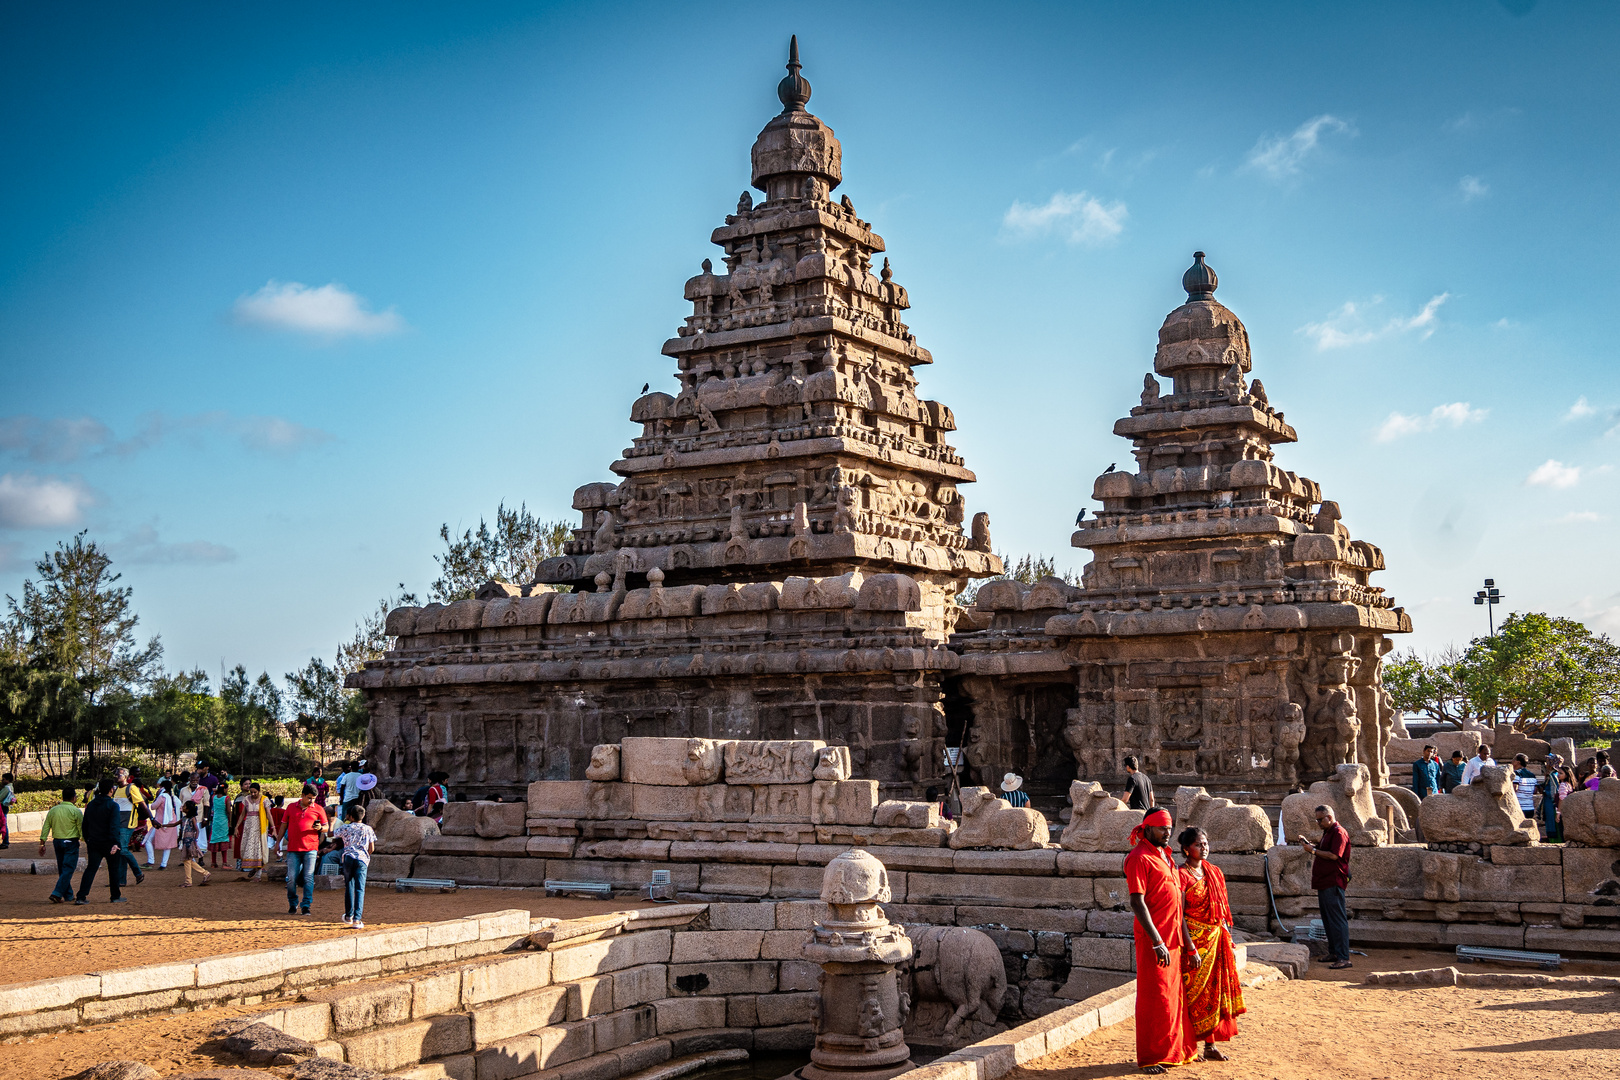 Küstentempel (Shore Temple), Mamallapuram